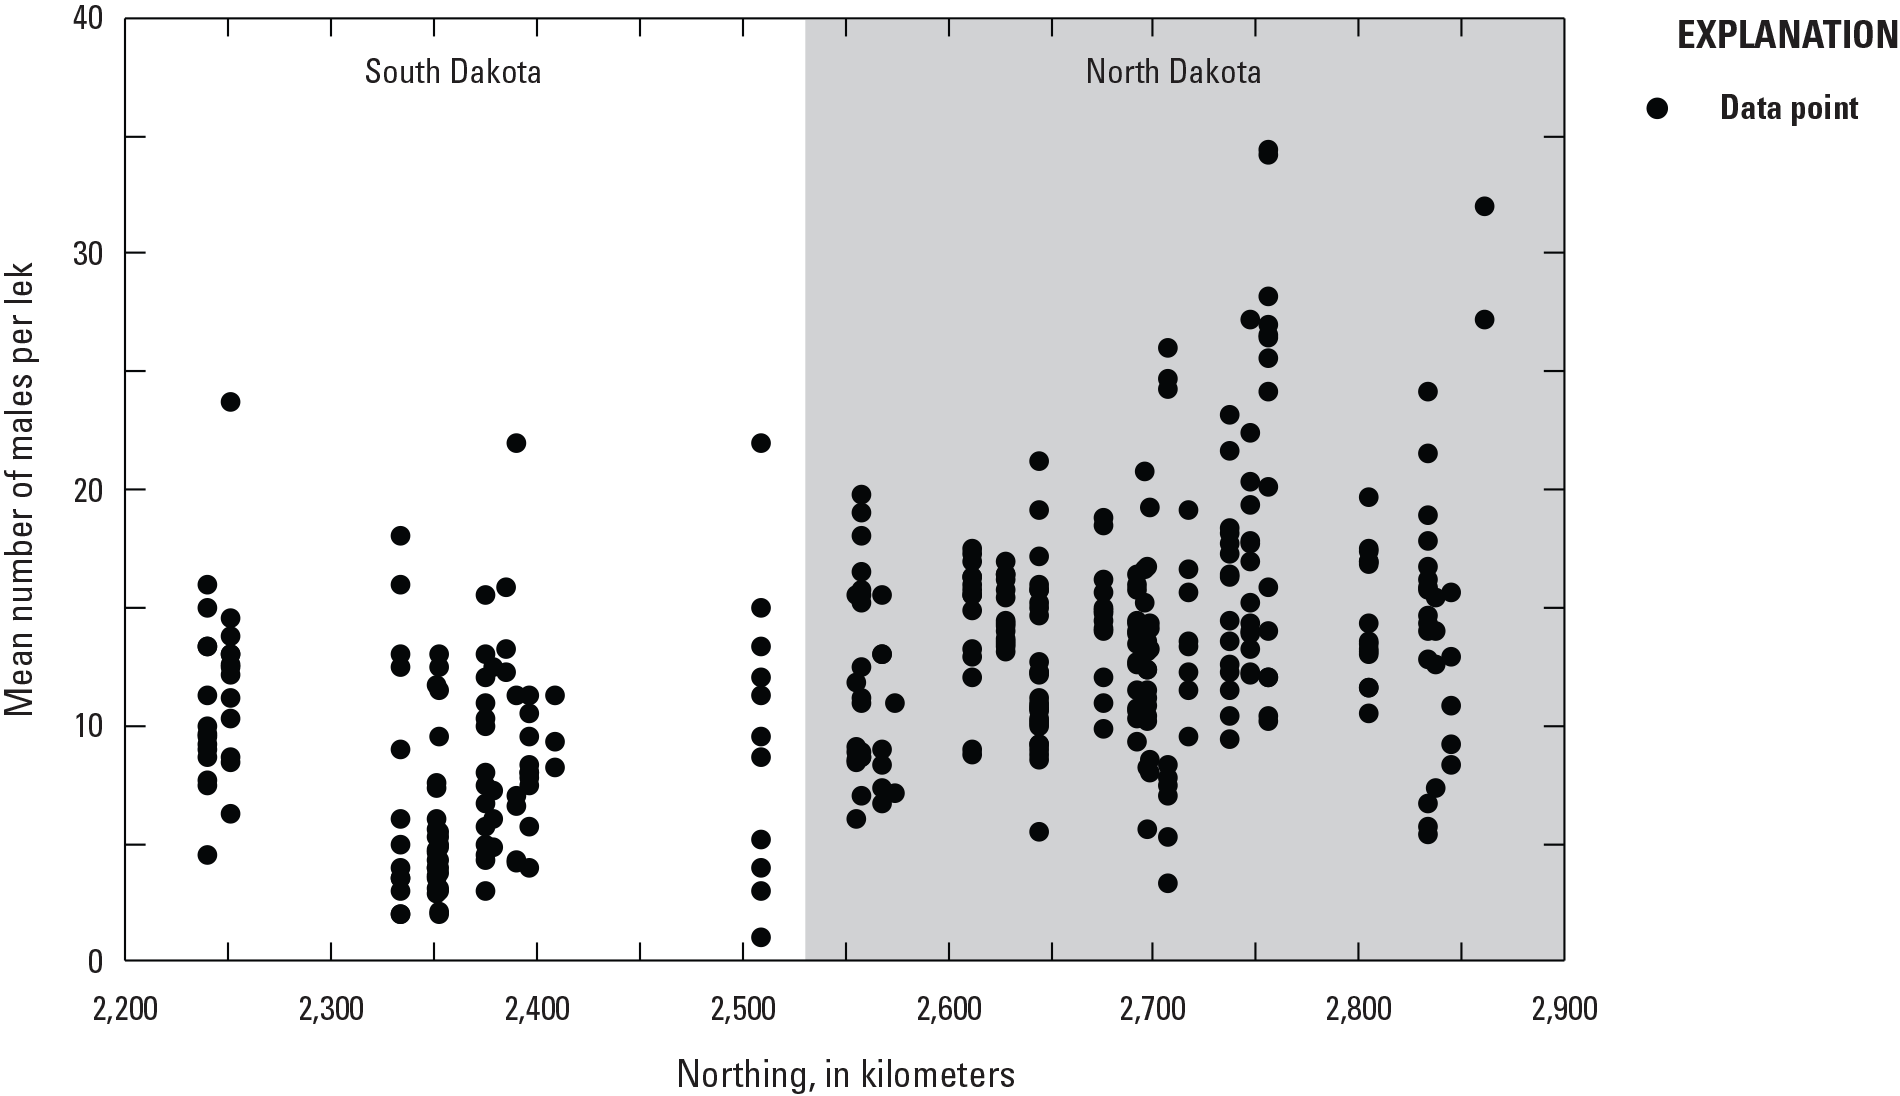 Mean number of male grouse per lek increased with increasing northing in North Dakota
                        than South Dakota